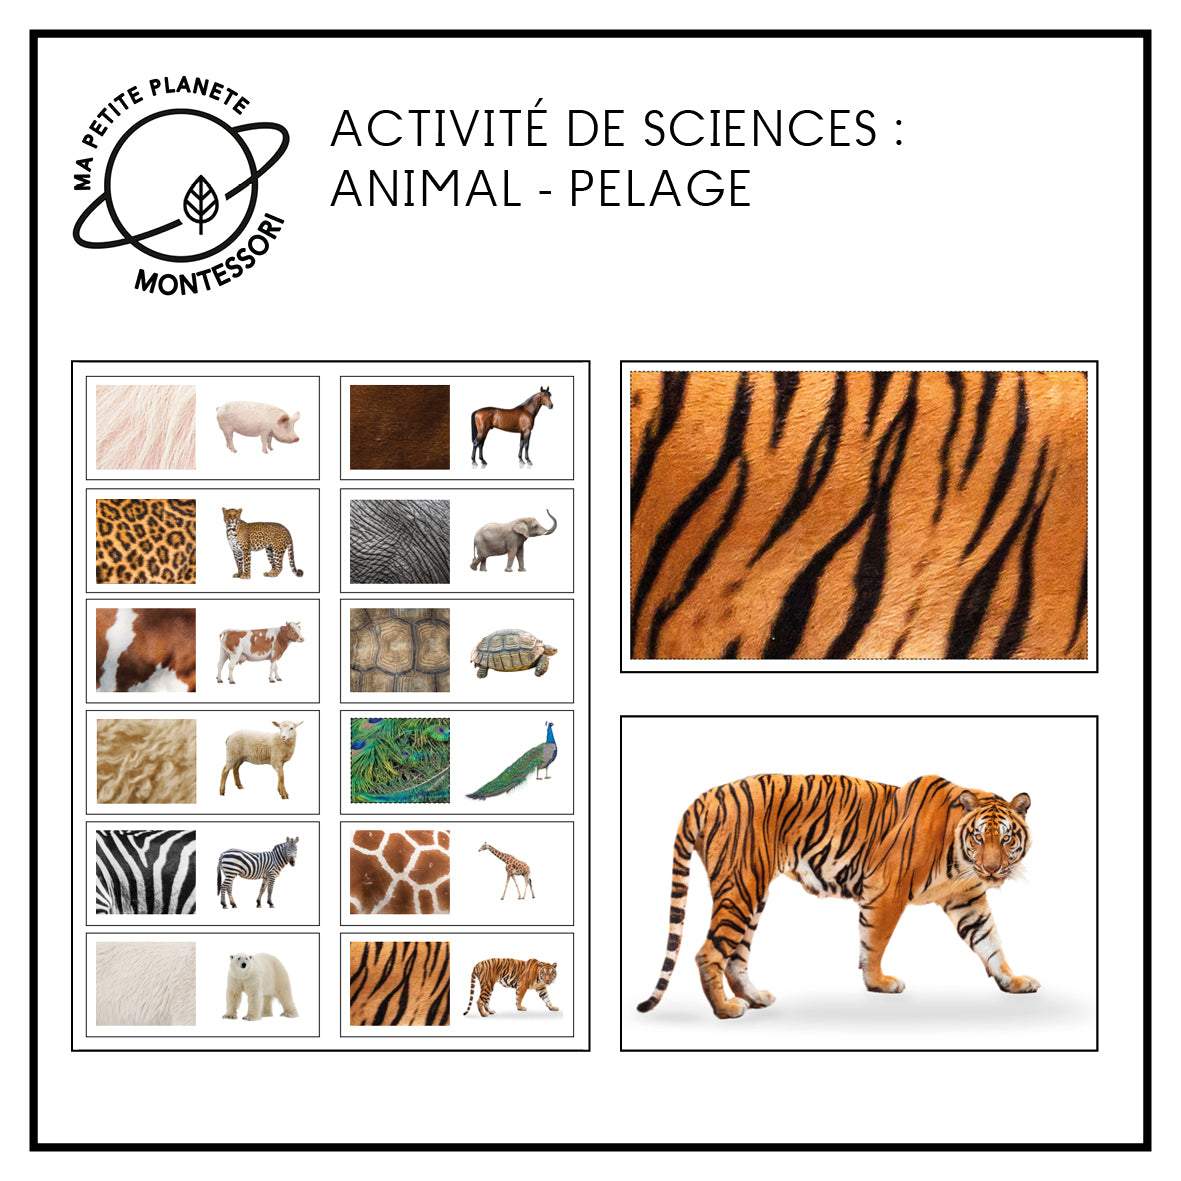 Association : Animal - Pelage